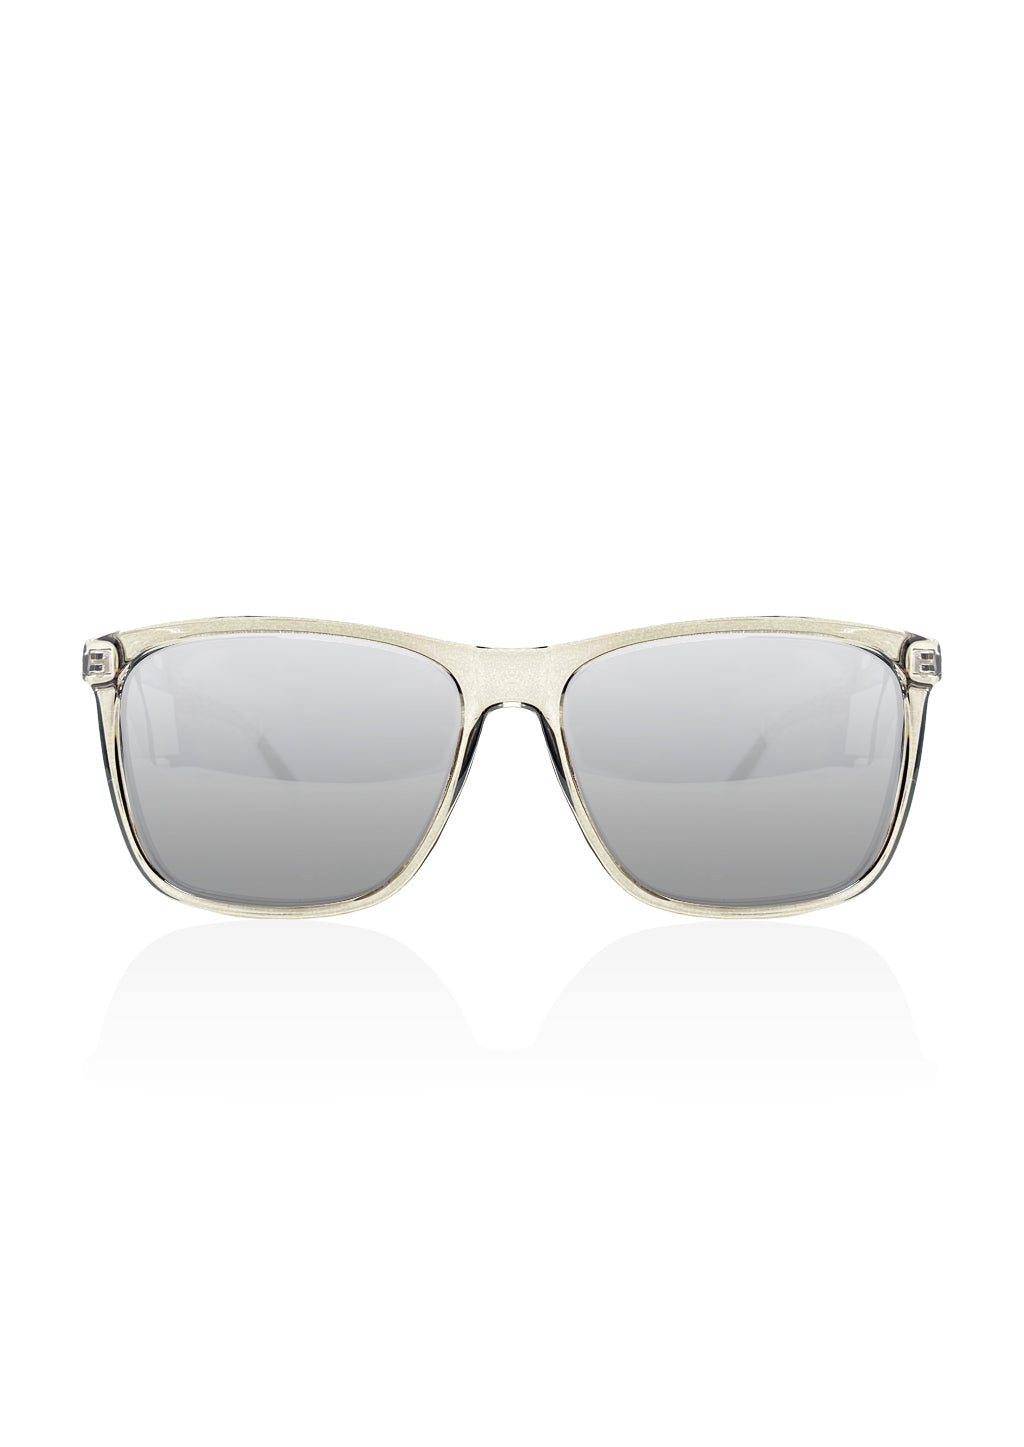 Soho Wayfarer sunglasses - Front